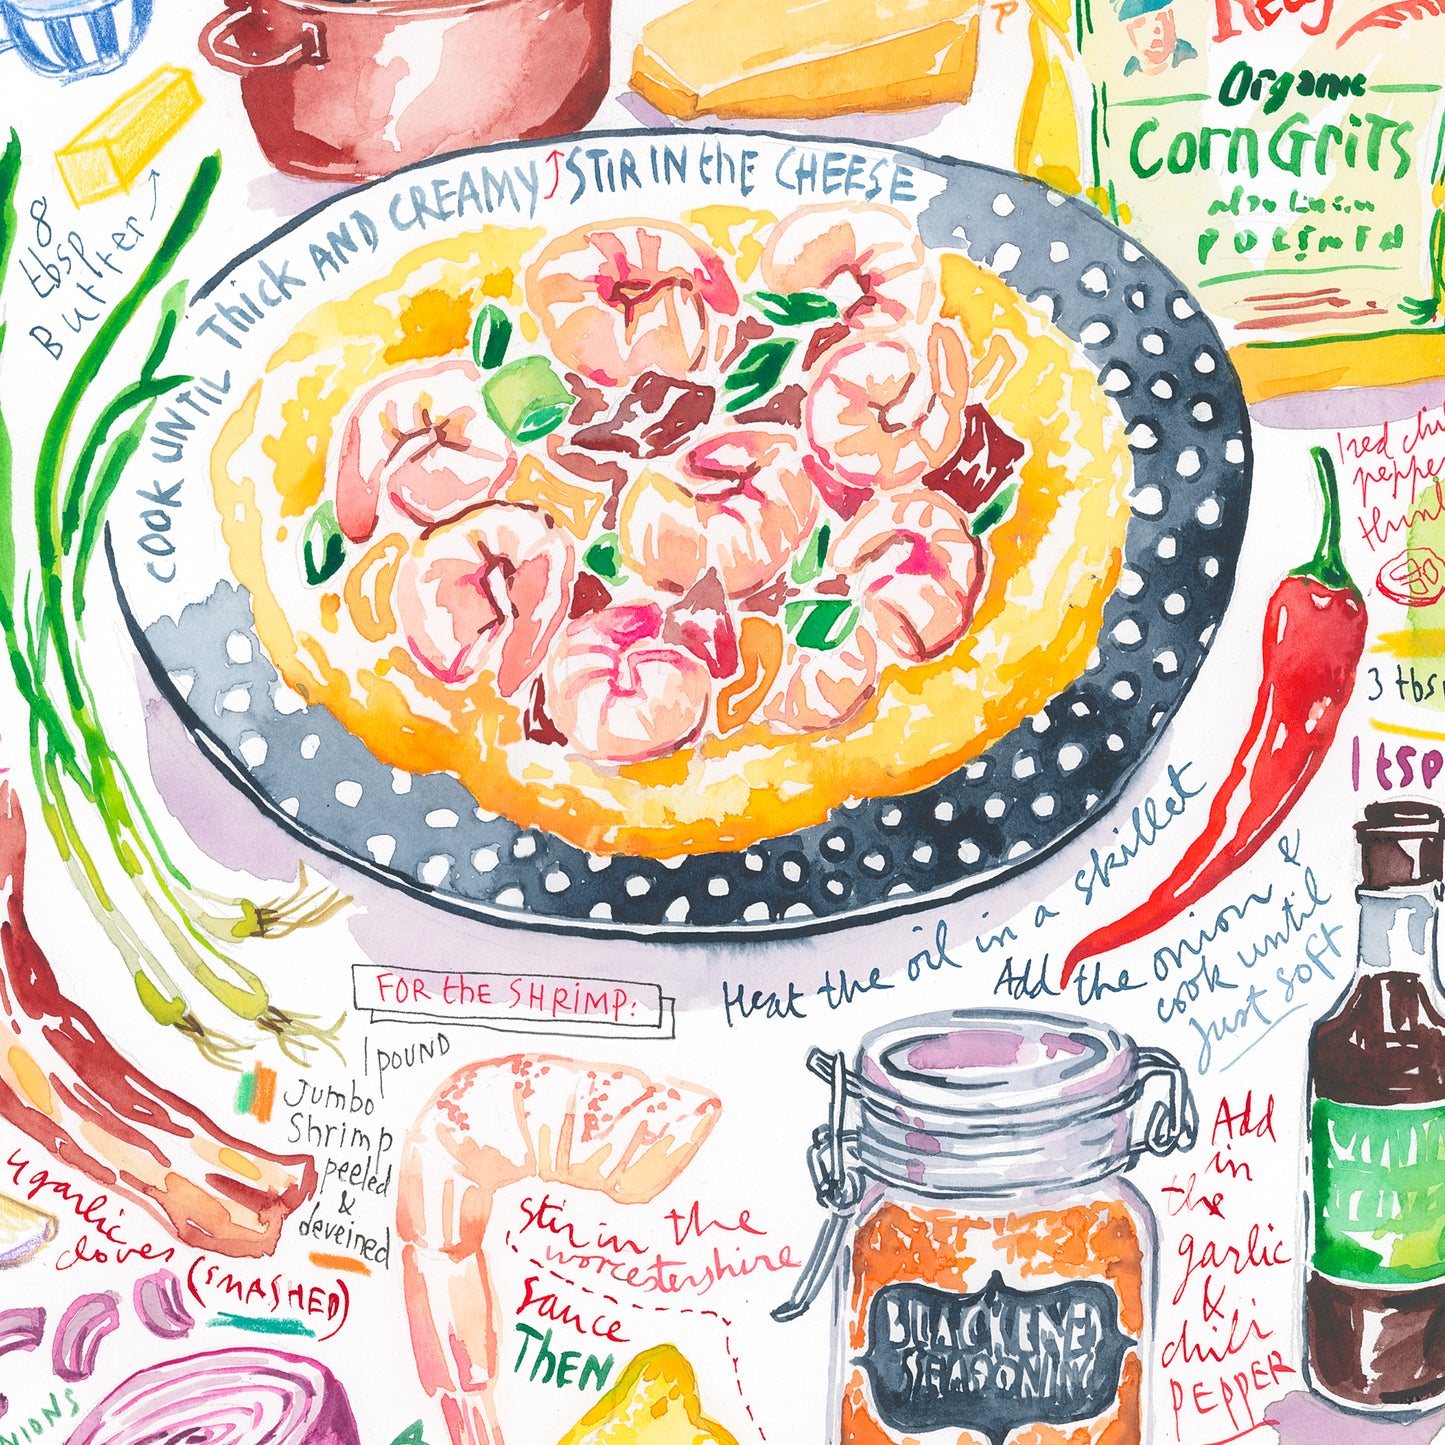 Shrimp and Grits recipe. Original watercolor painting